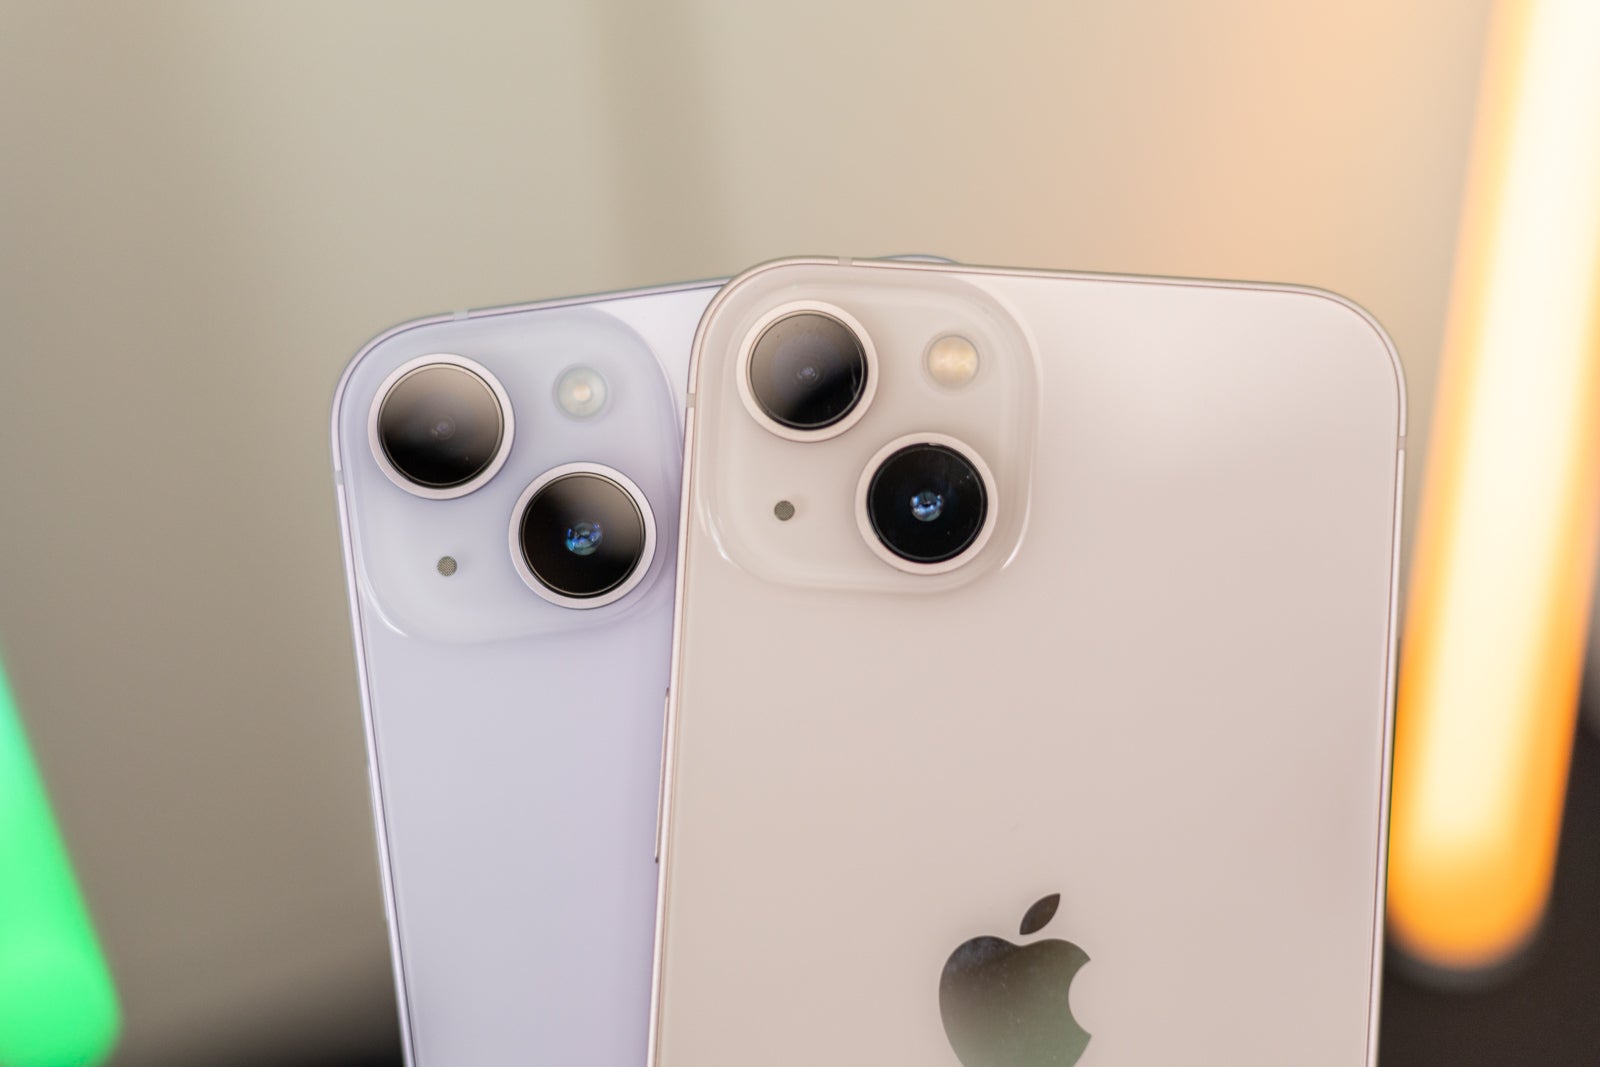 (Image Credit - PhoneArena) iPhone 14 vs iPhone 13 cameras - iPhone 14 vs iPhone 13: main differences